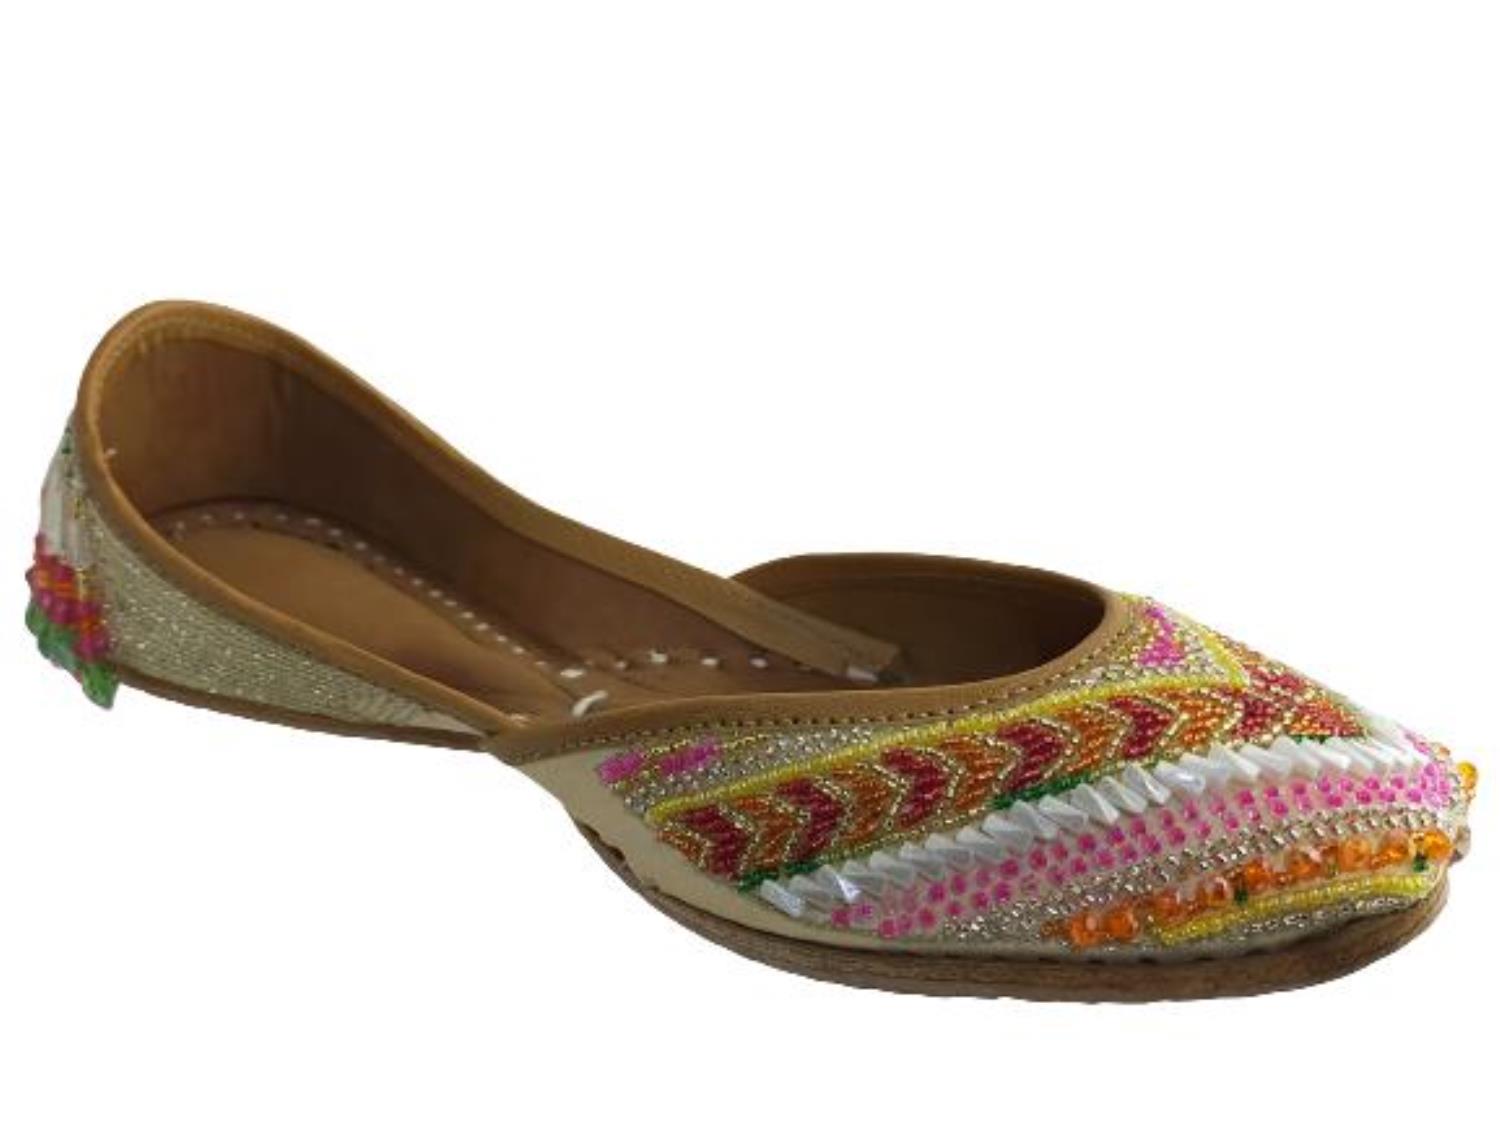 Traditional Shoes women's Mojari Shoes Womens Shoes Slip Ons Juttis & Mojaris women's Shoes women Shoes Indian women's Wear| women's Jutti Free Shipping Wedding Shoes 